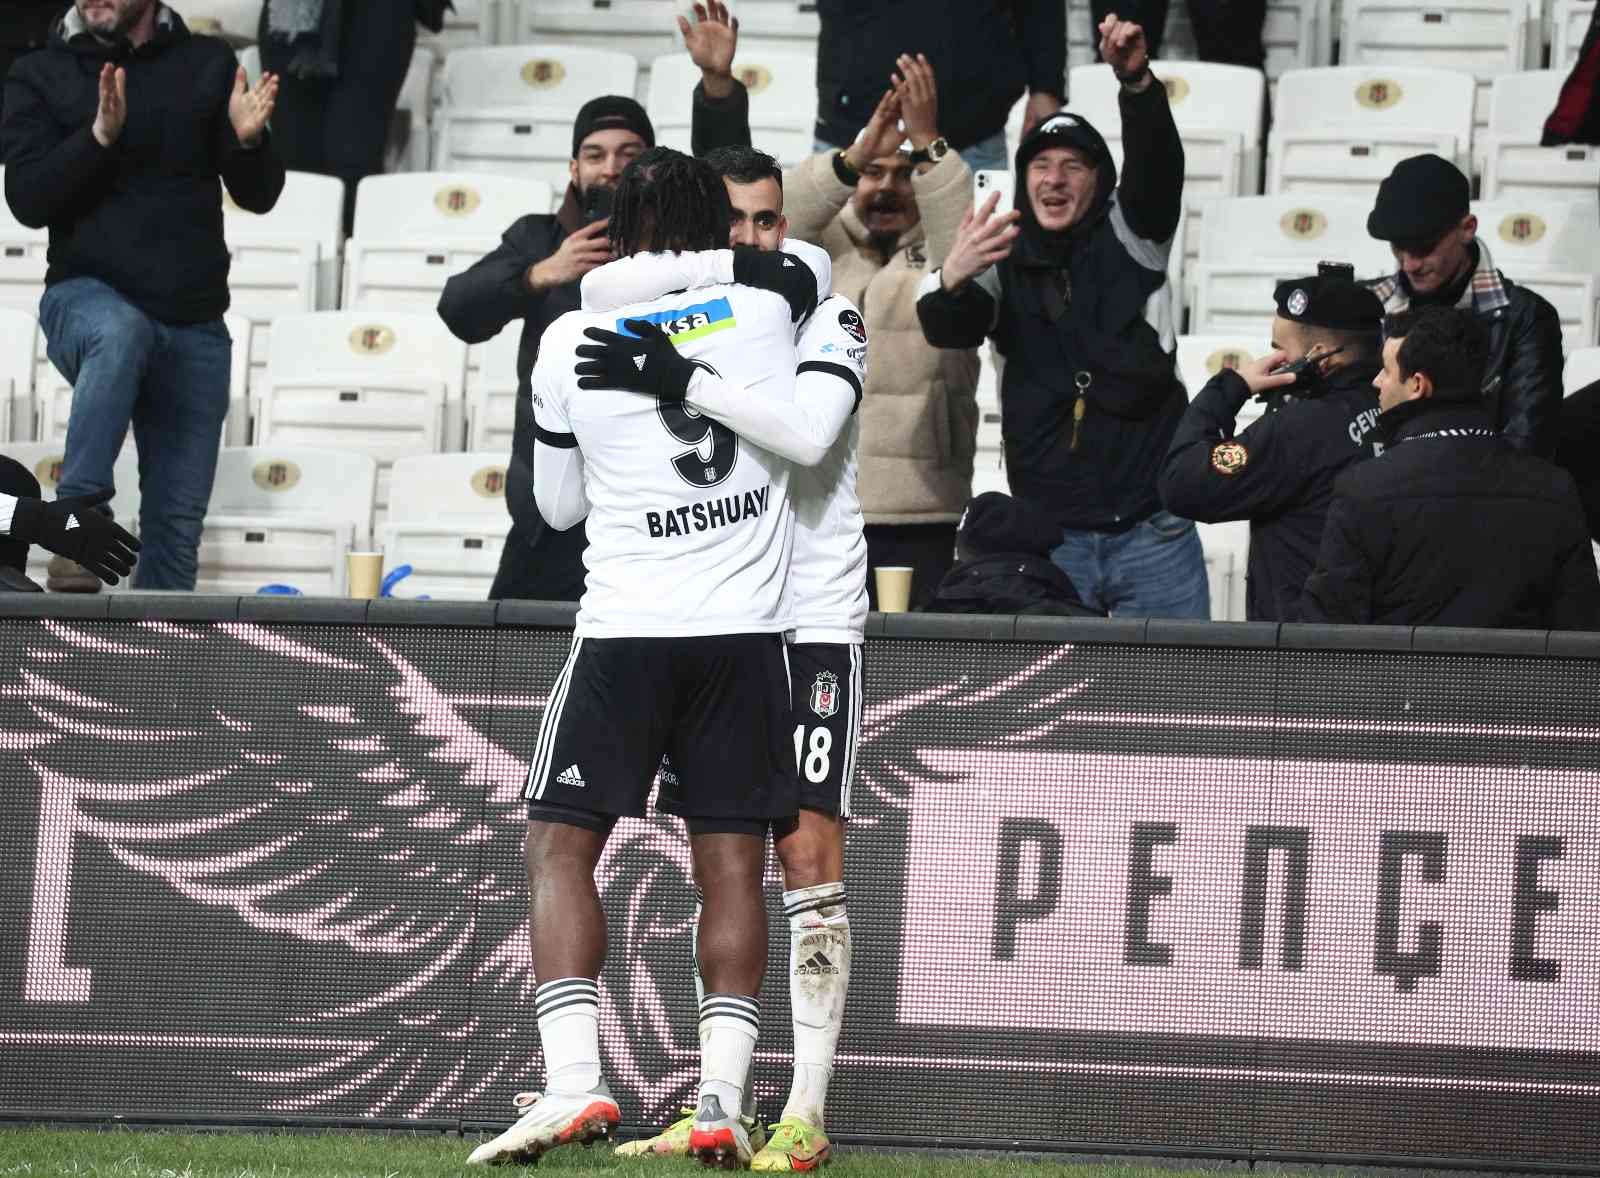 Spor Toto Süper Lig: Beşiktaş: 2 - Göztepe: 1 (Maç sonucu) #istanbul